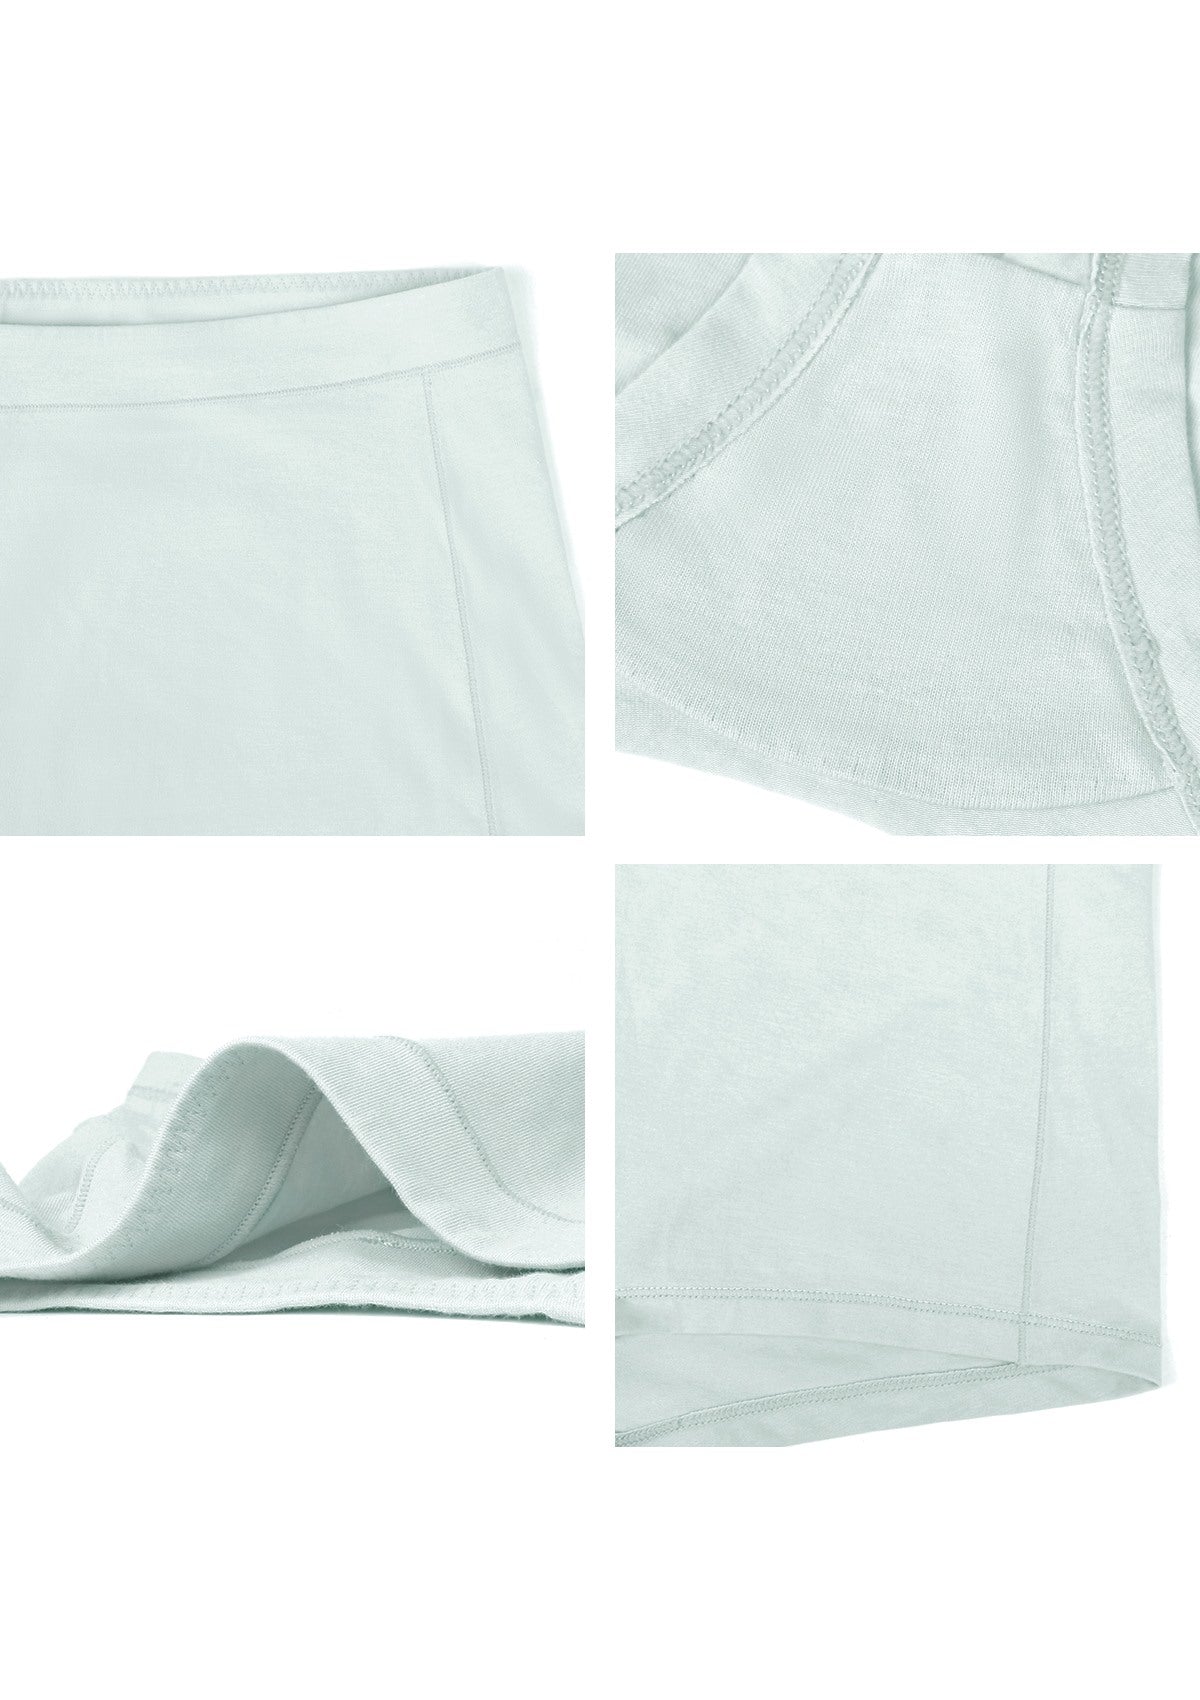 All-Day Comfort Mid-Rise Cotton Boyshorts Underwear 3 Pack - L / Black+Beige+Green